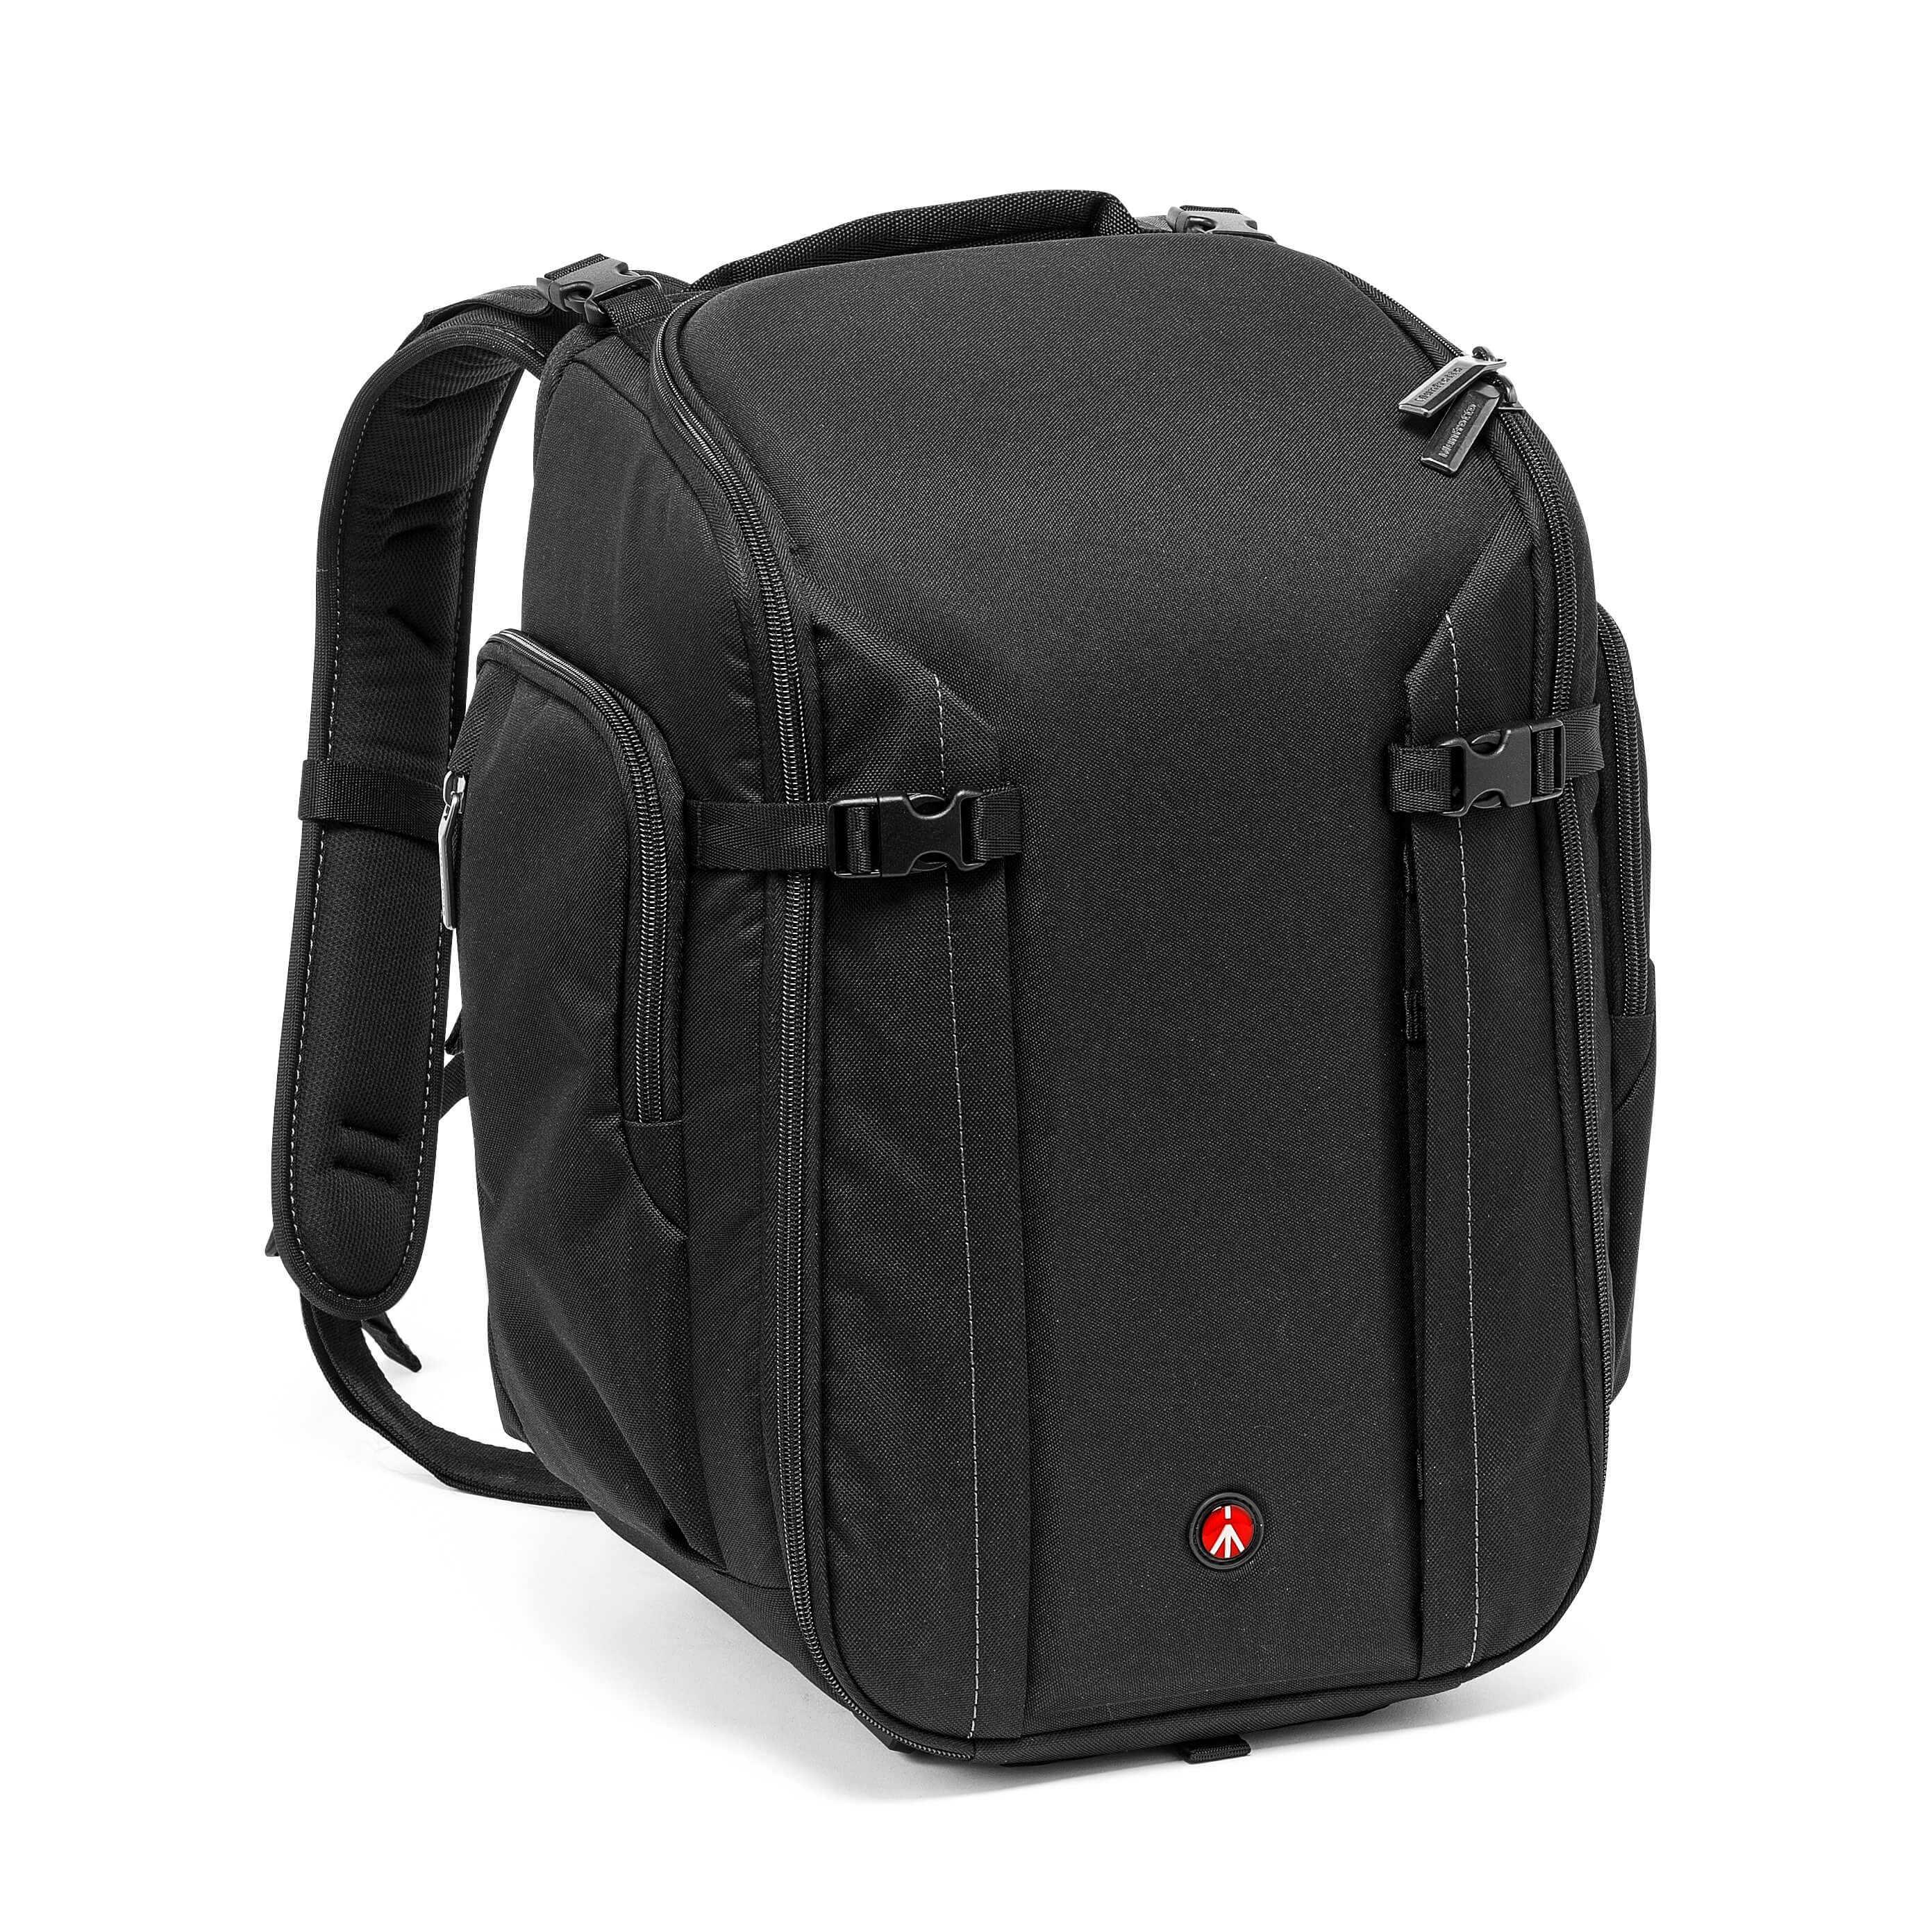 Photo/Video Backpack 30 MB MP -BP-30BB, 15, Black